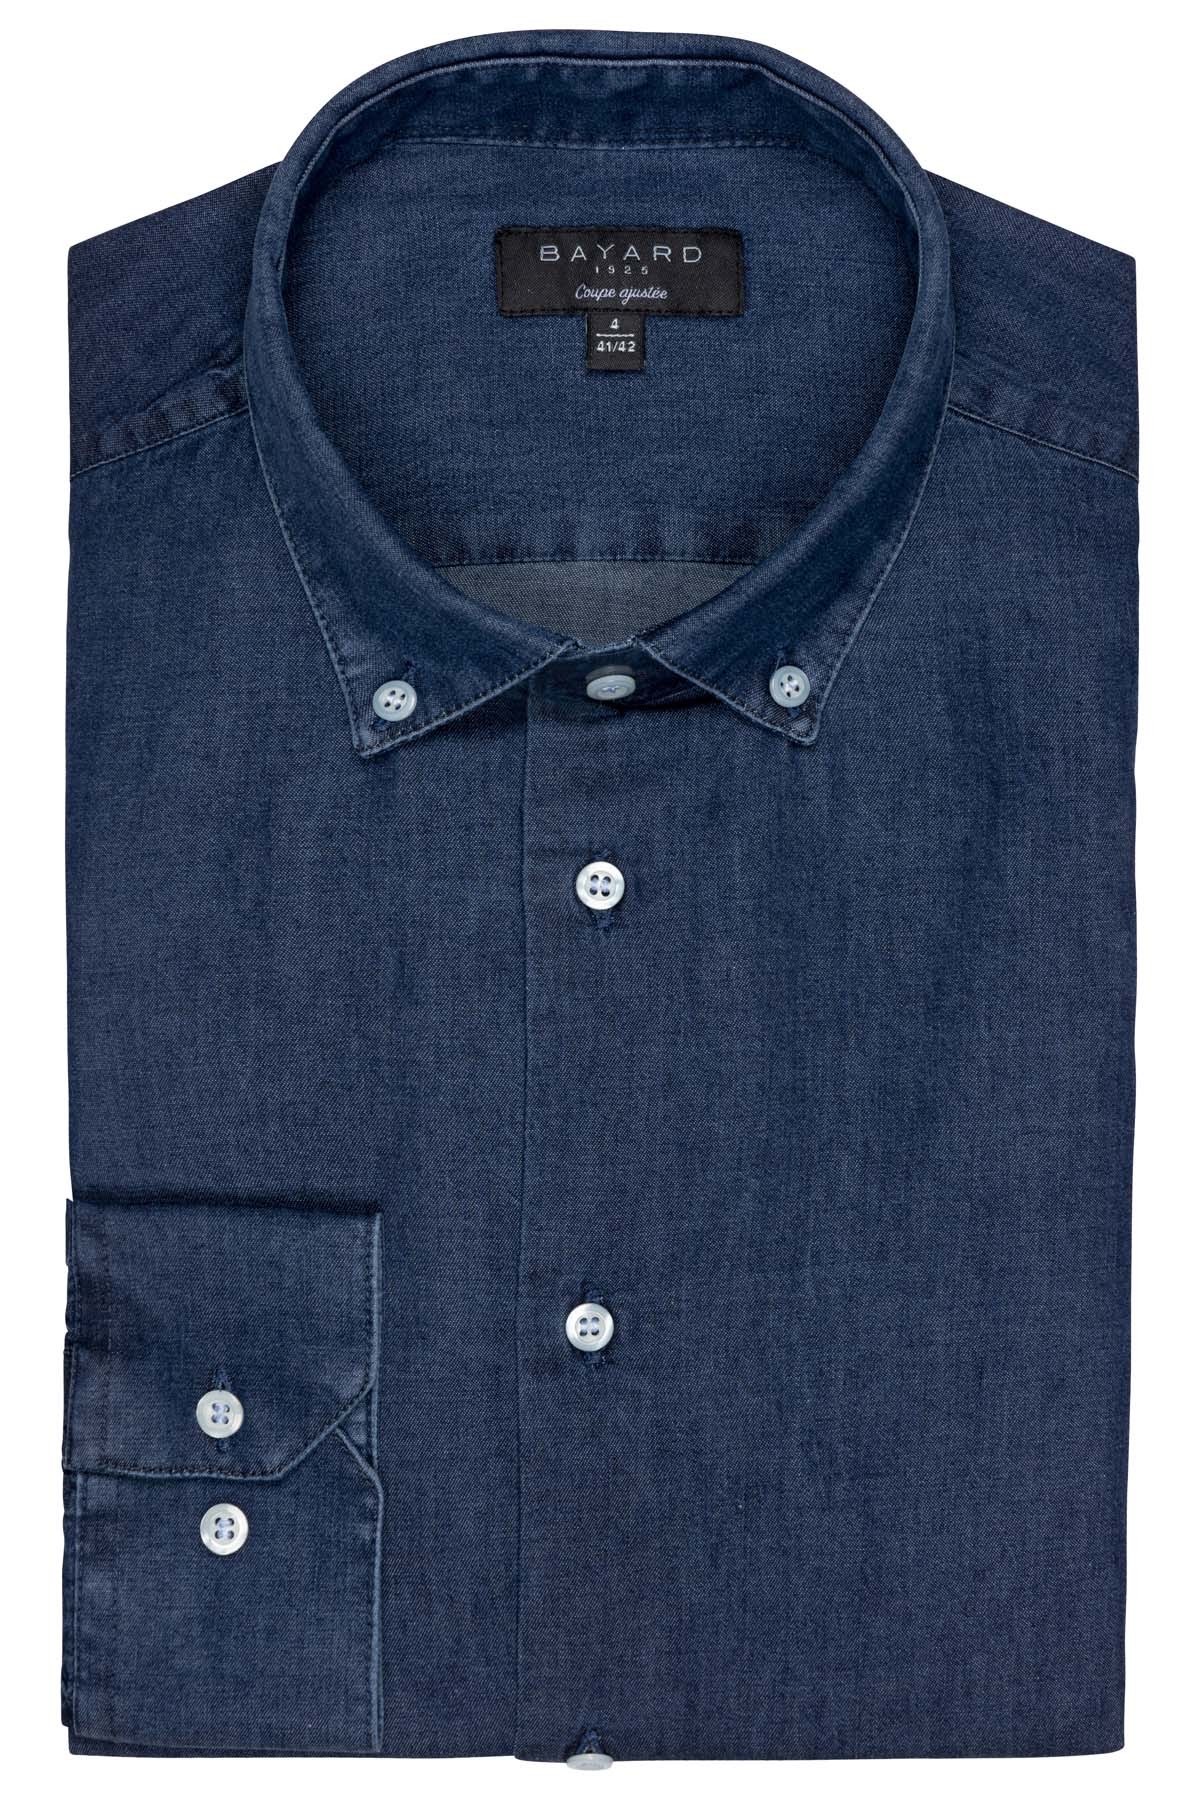 chemise jean bleu marine coton bayard